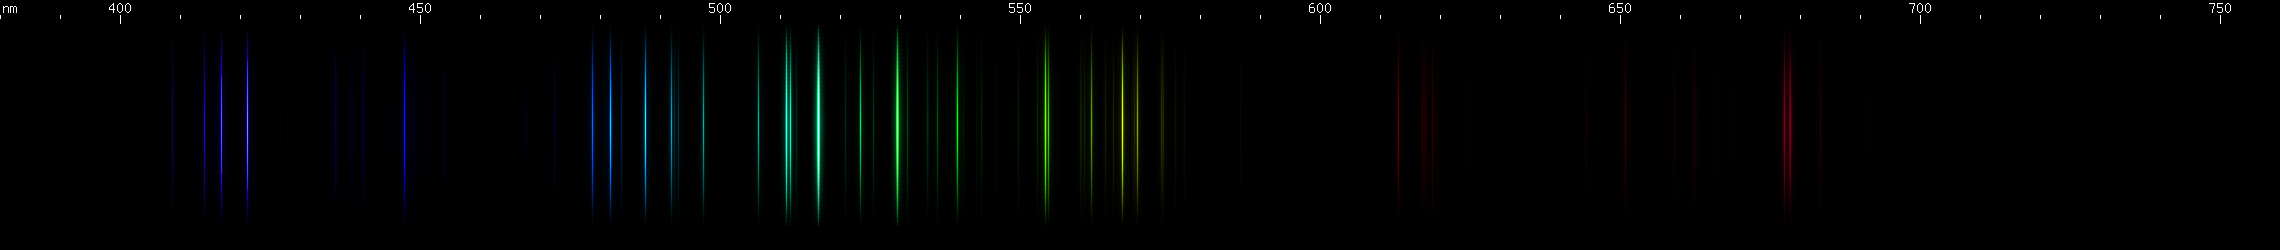 Spectral lines of Palladium.